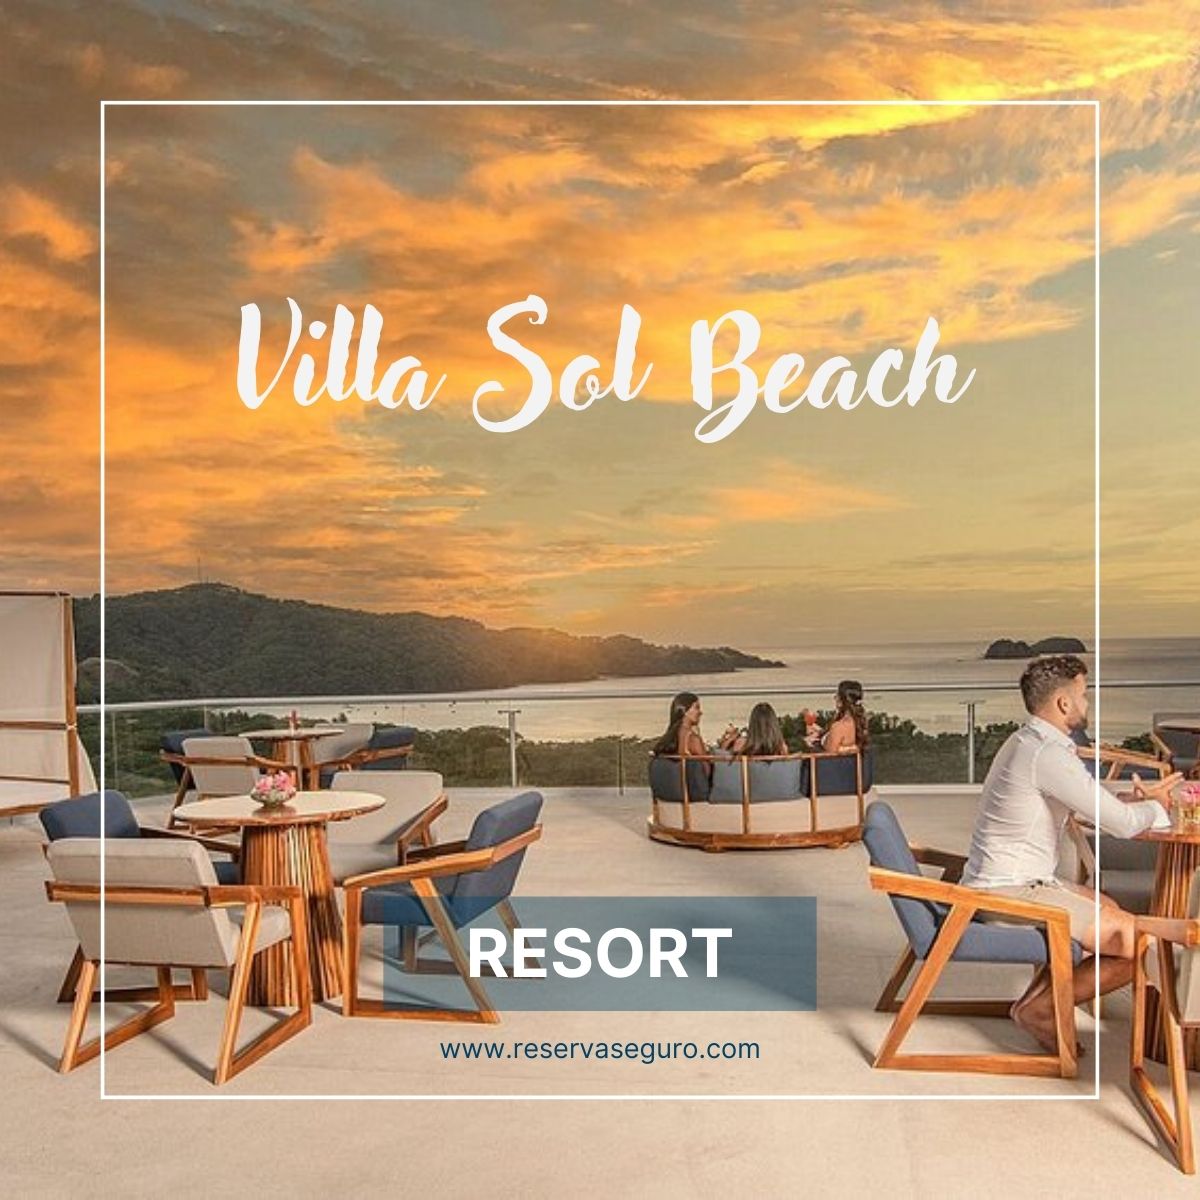 Villas Sol Beach Resort – All Inclusive